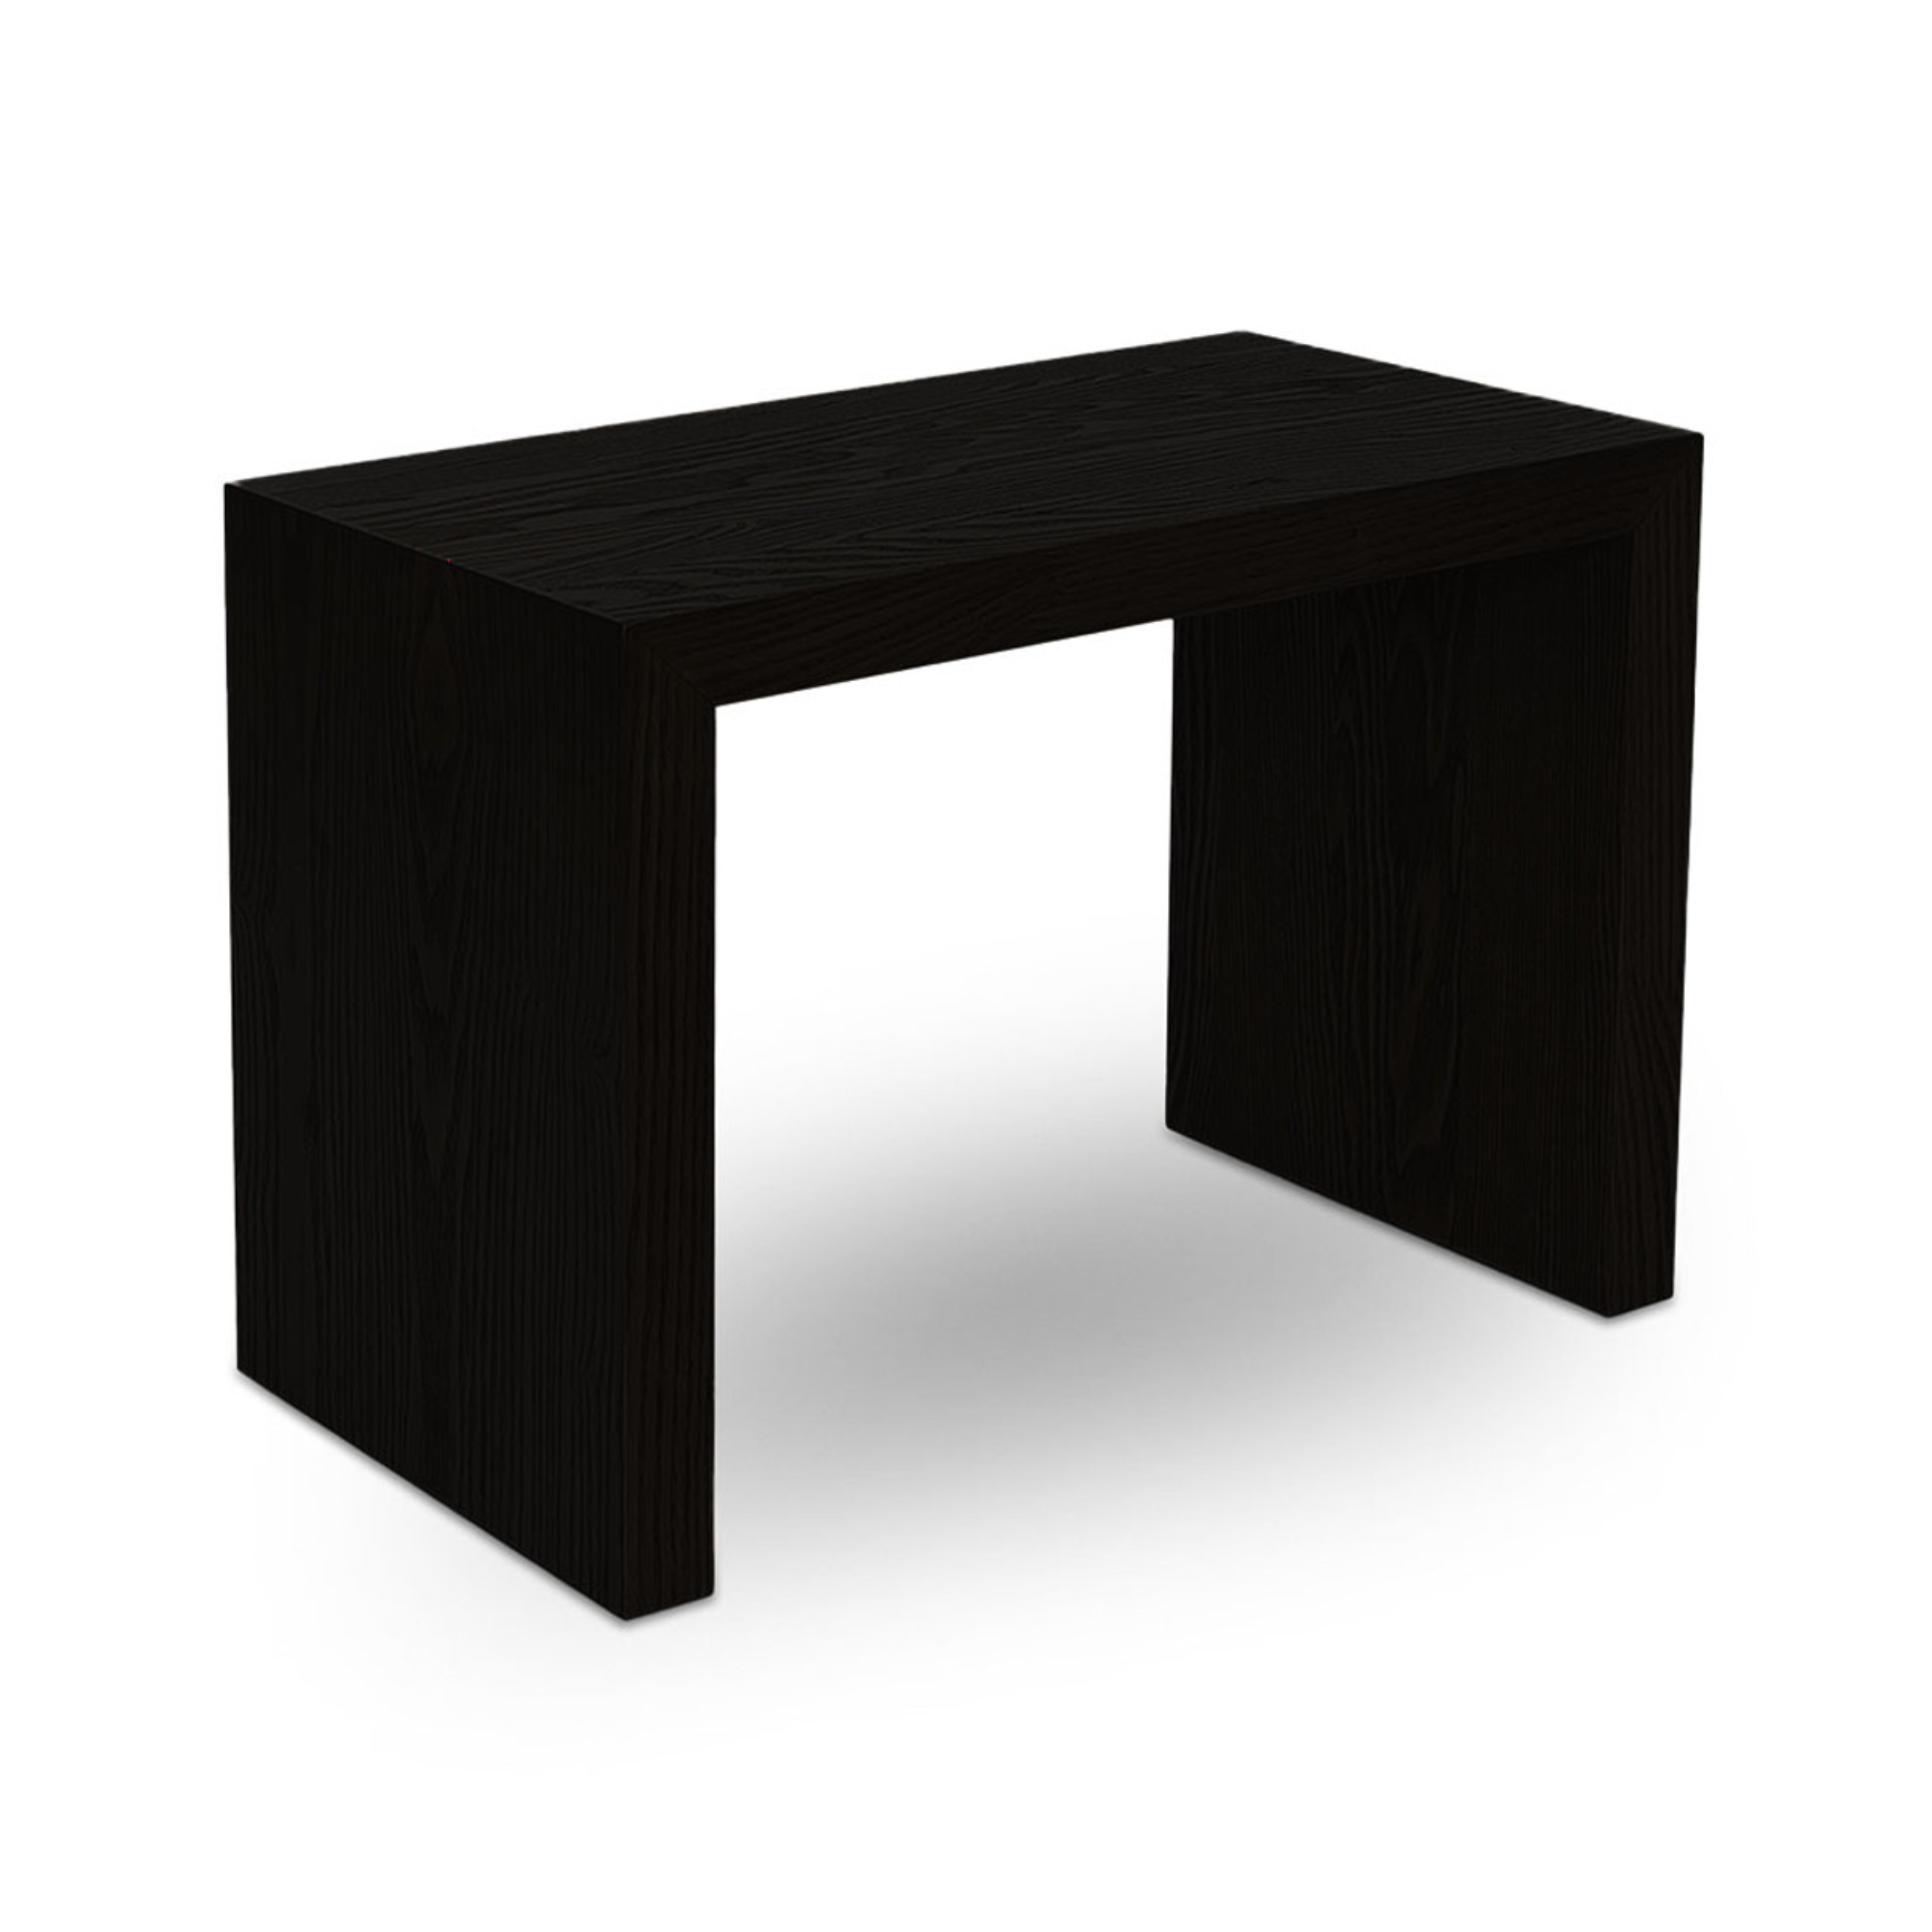 Octavia Accent Table - Black